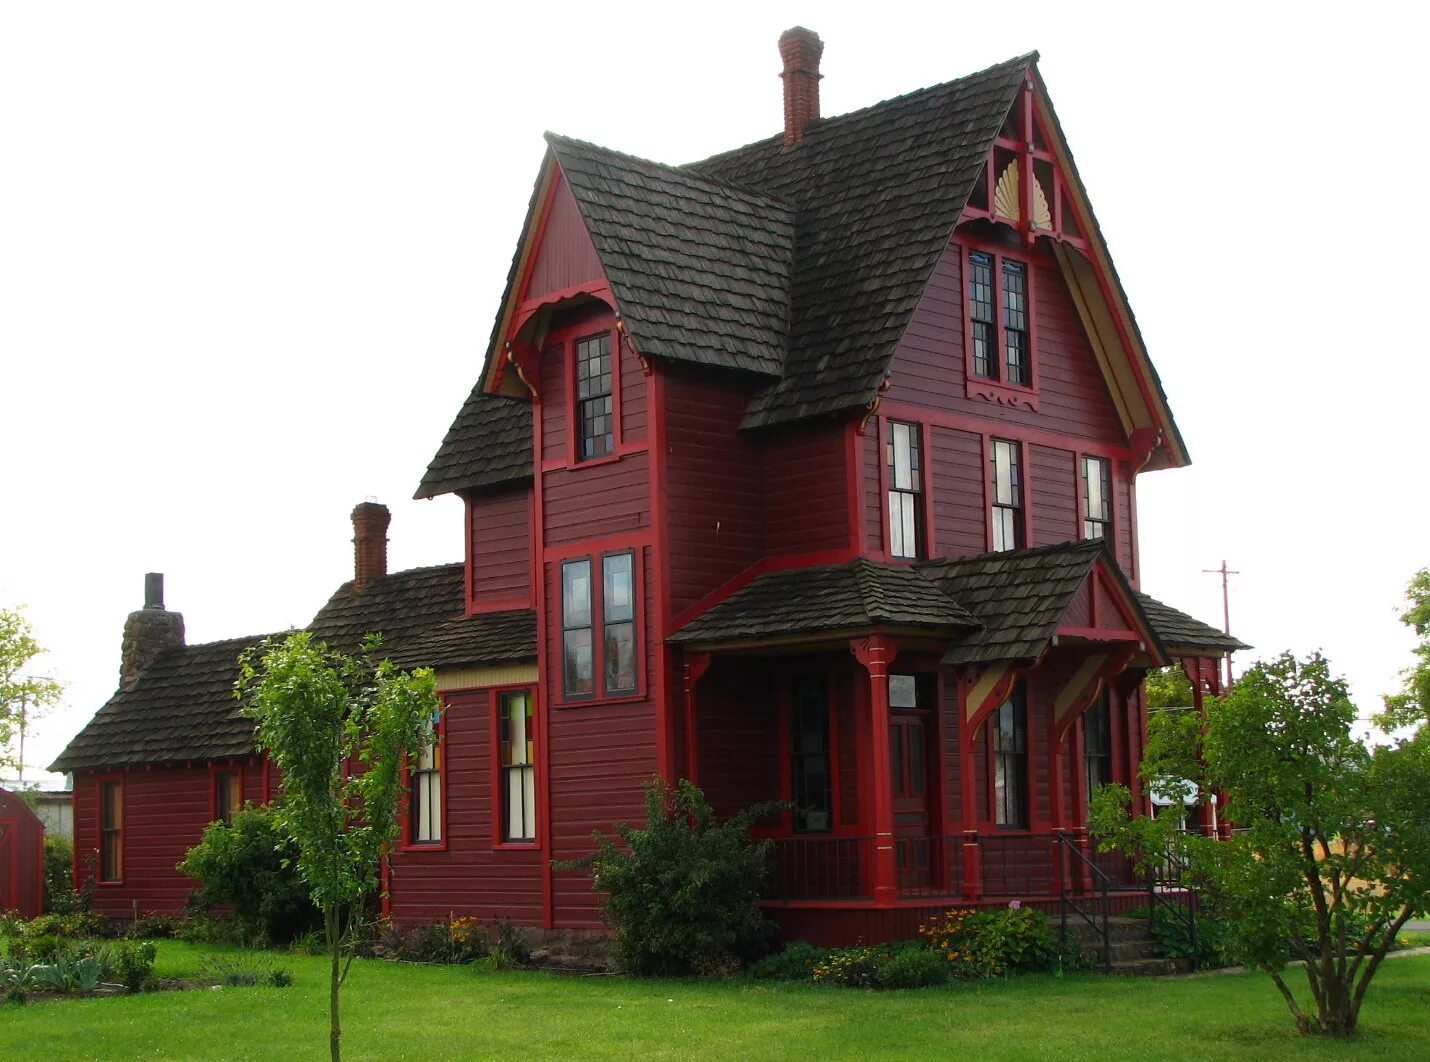 Домики красного цвета. Красный дом. Красный деревянный дом. Коричневый дом. Коричневый дом с красной крышей.